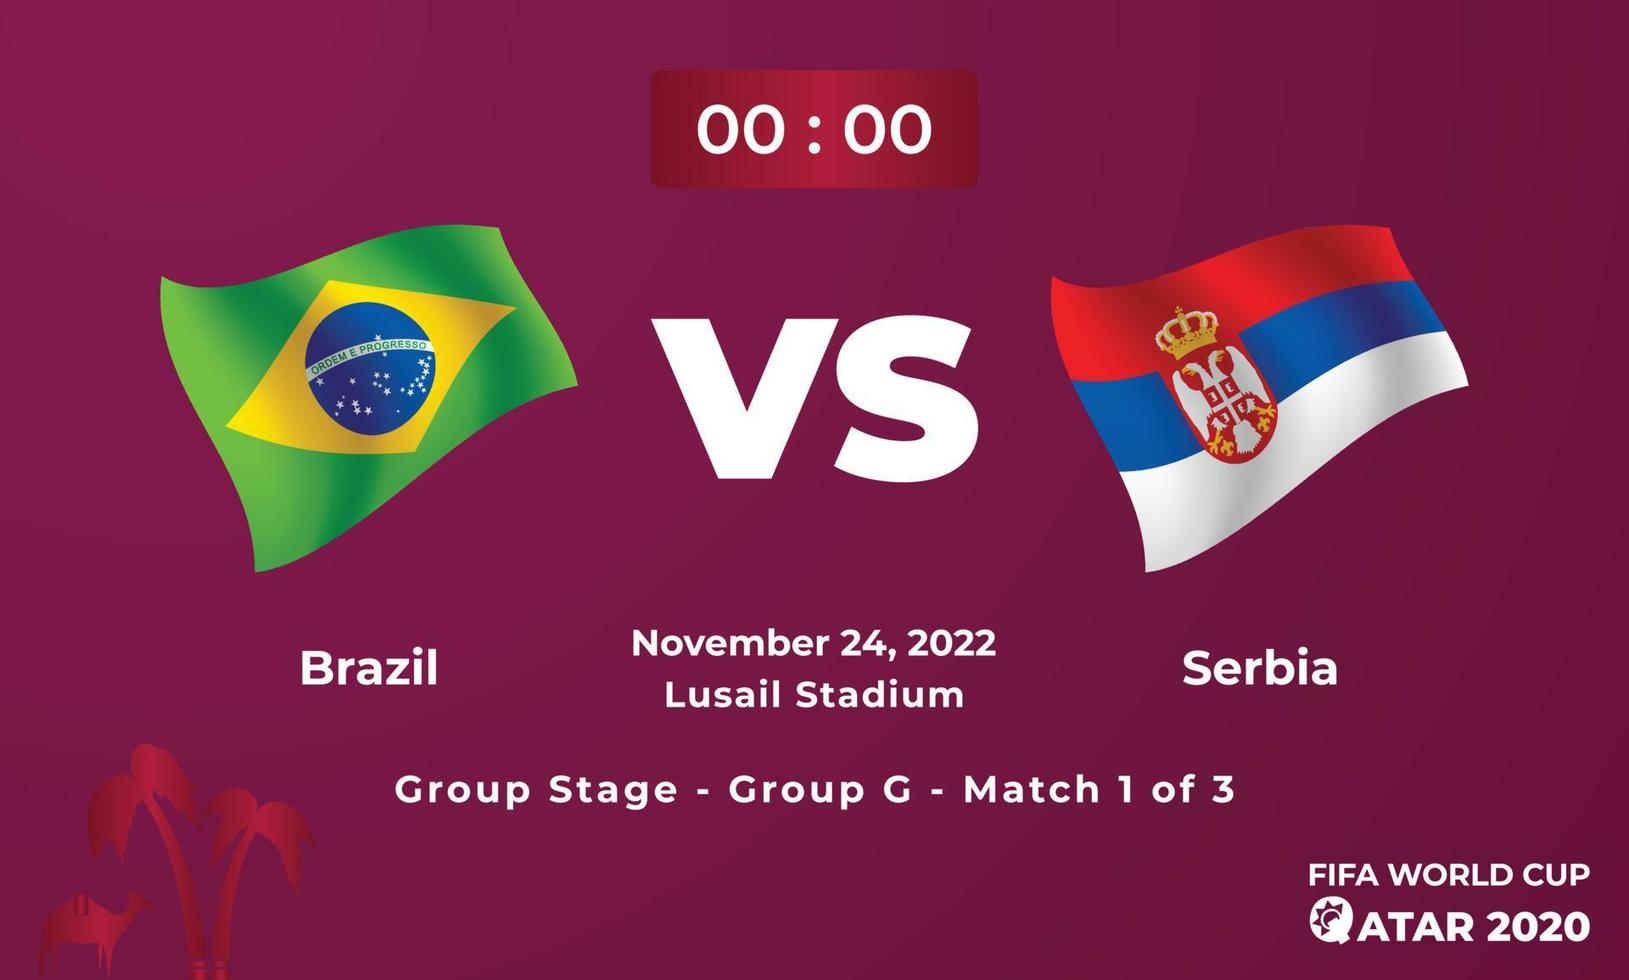 Brazil VS Serbia Football MatchTemplate, FIFA World Cup in Qatar 2022 vector